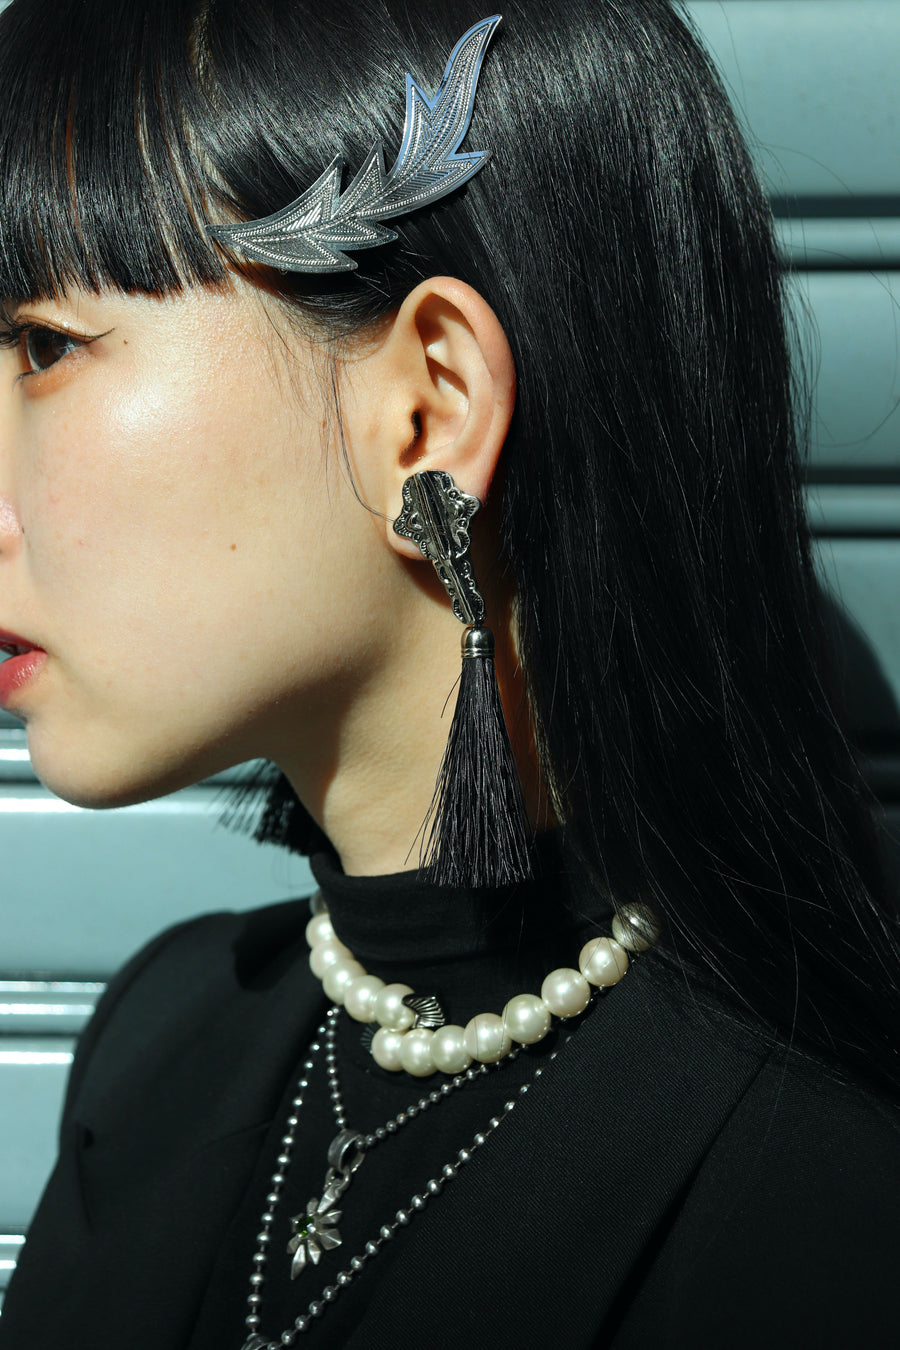 TOGA VIRILIS  Metal fringe earrings-2(BLACK)